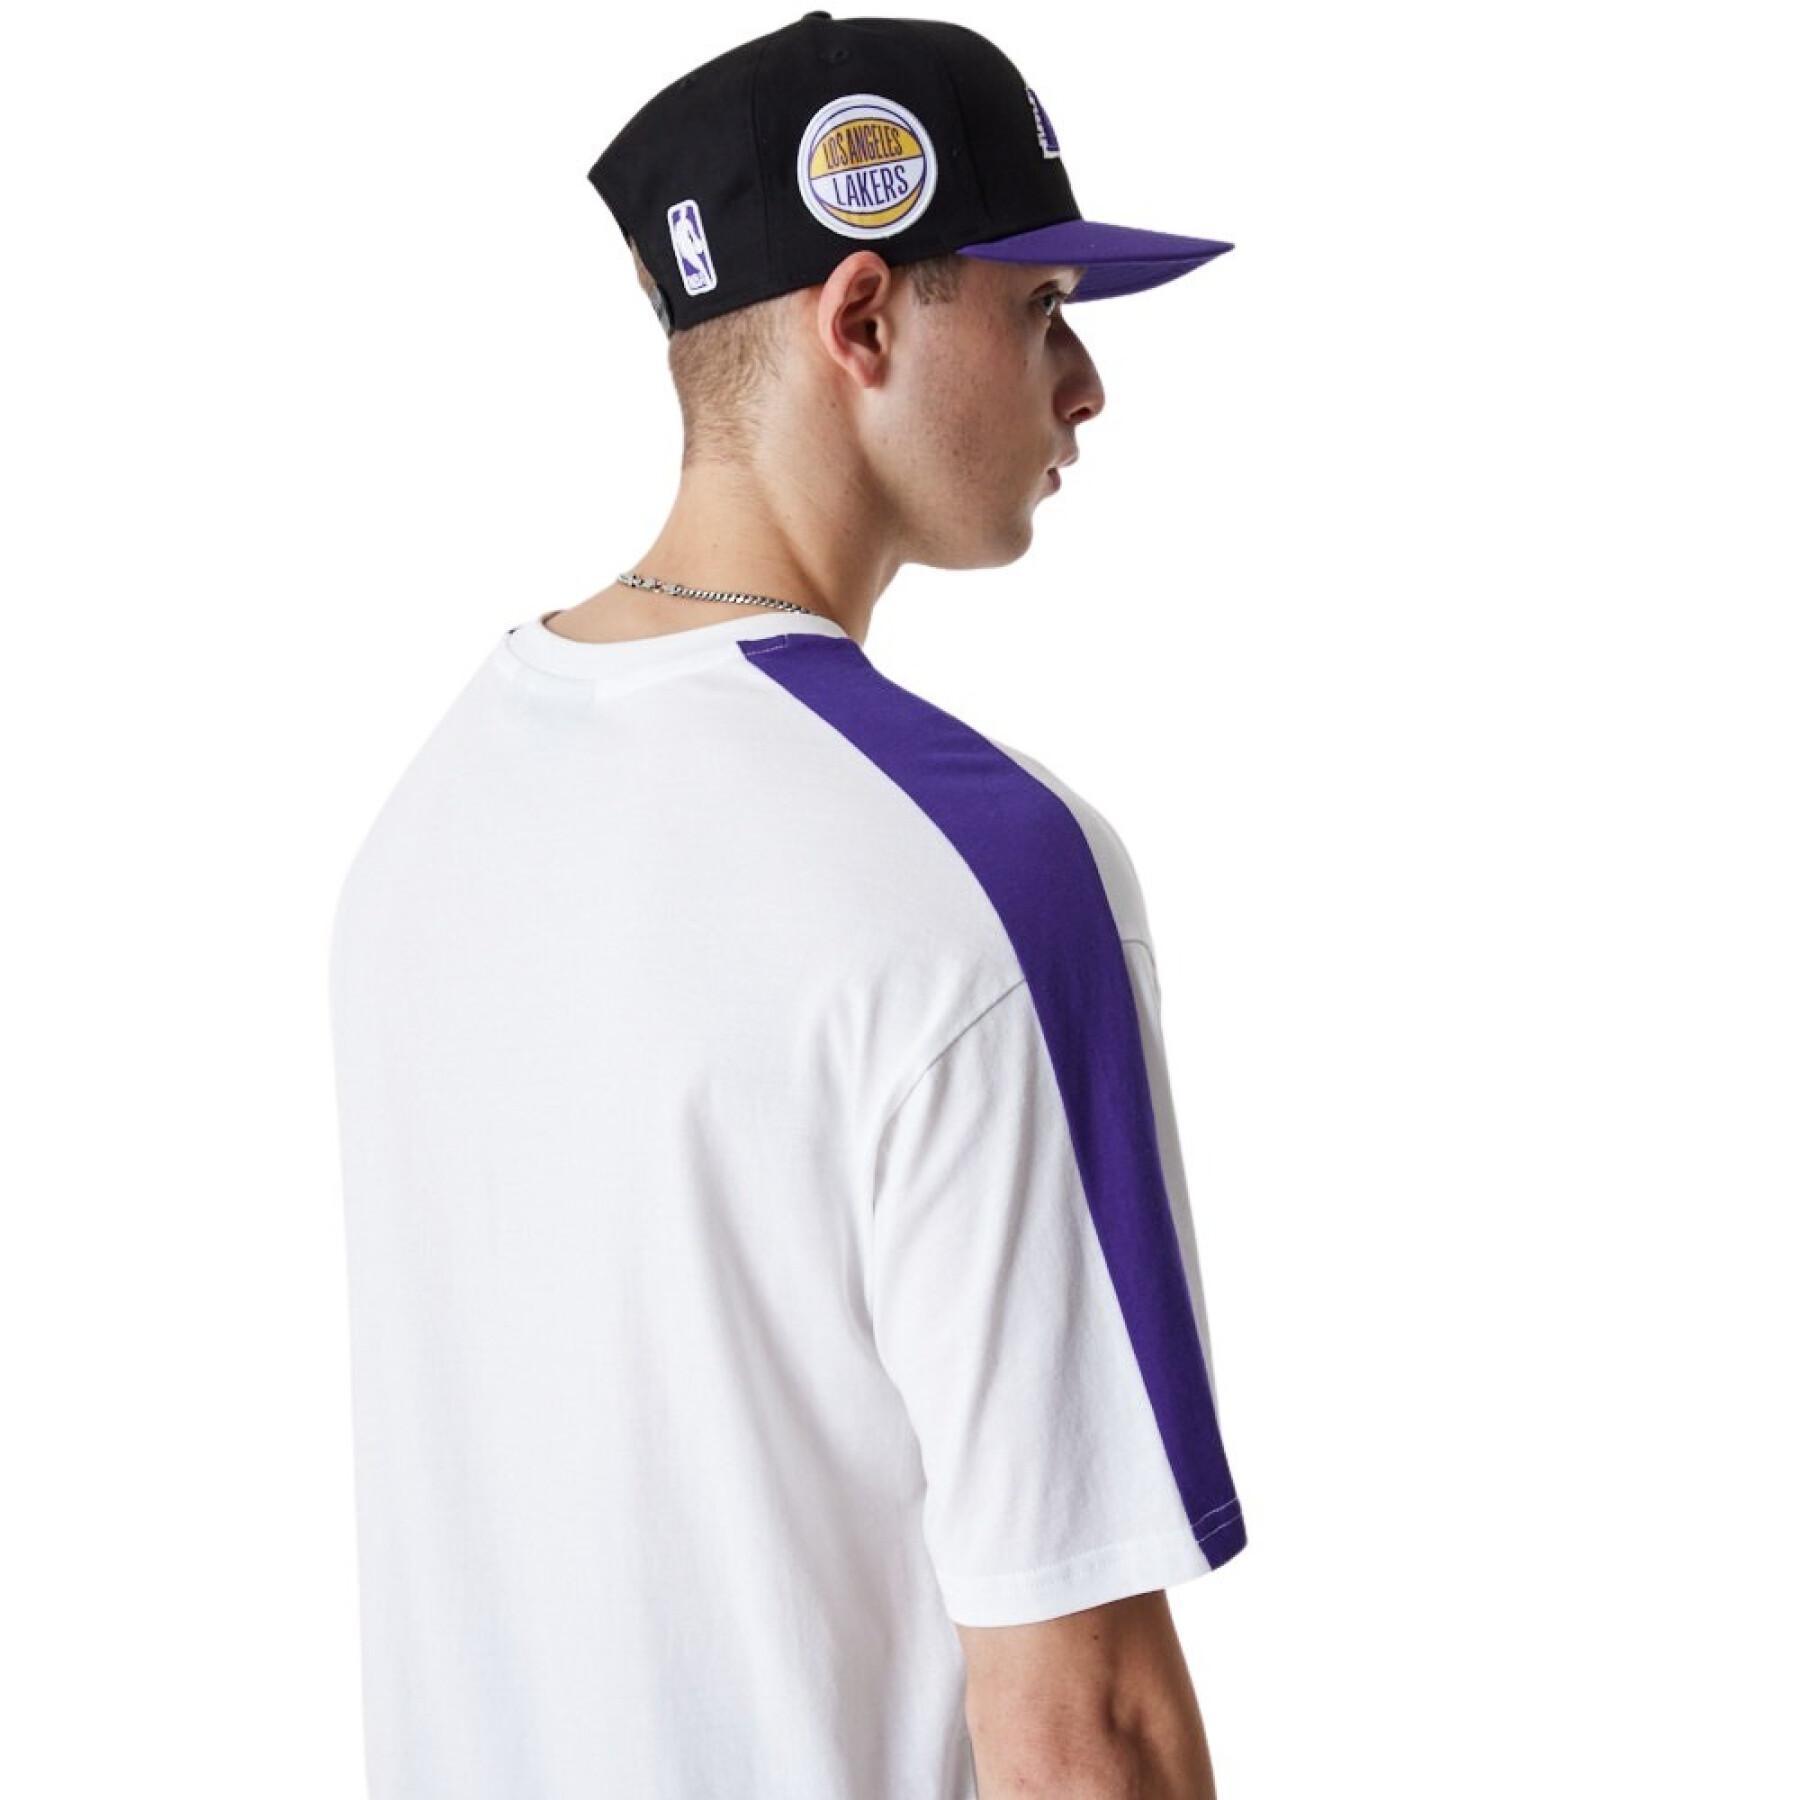 Nike Men's Los Angeles Lakers Block T-Shirt - Purple - L Each